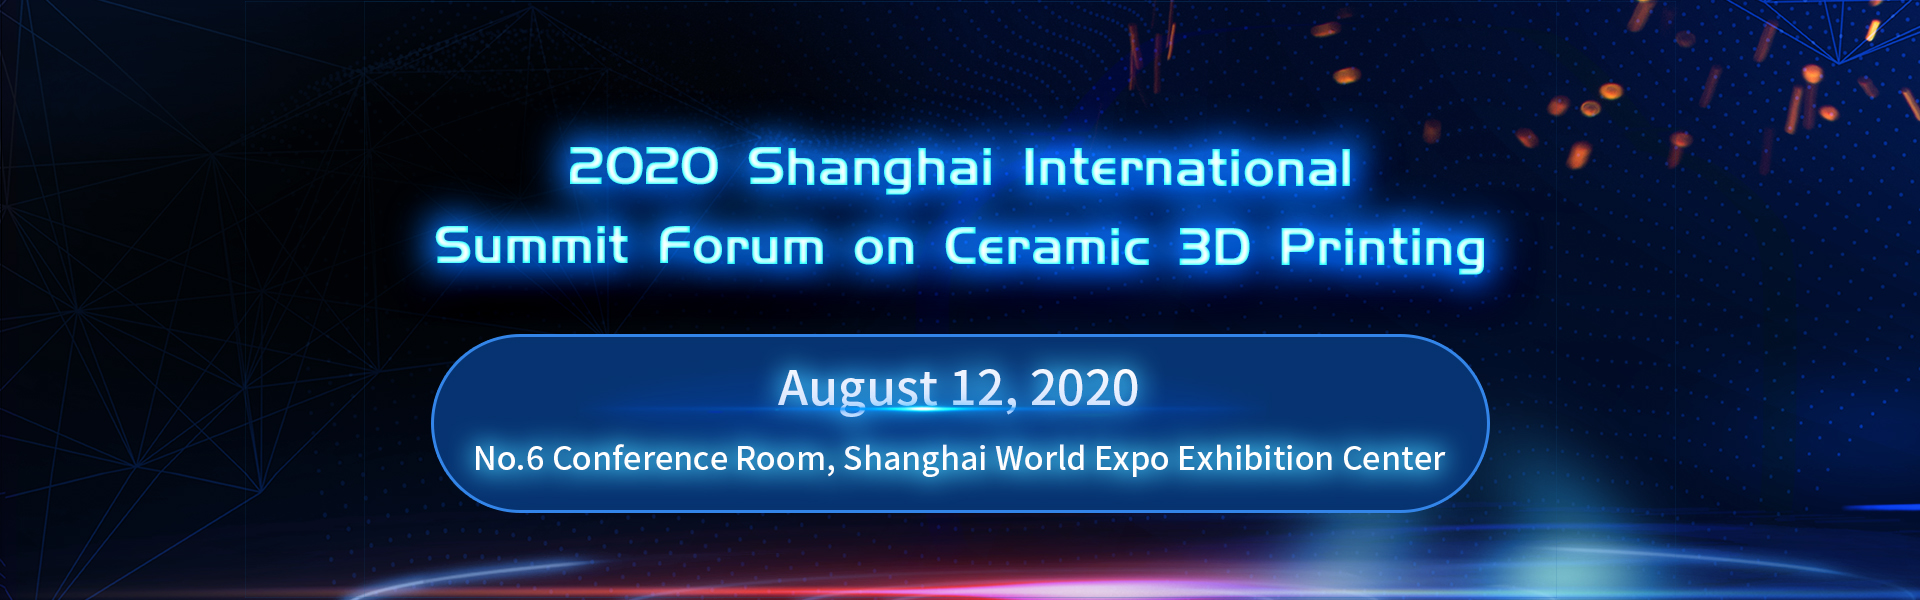 2020 Shanghai International Summit Forum on Ceramic 3D Printing